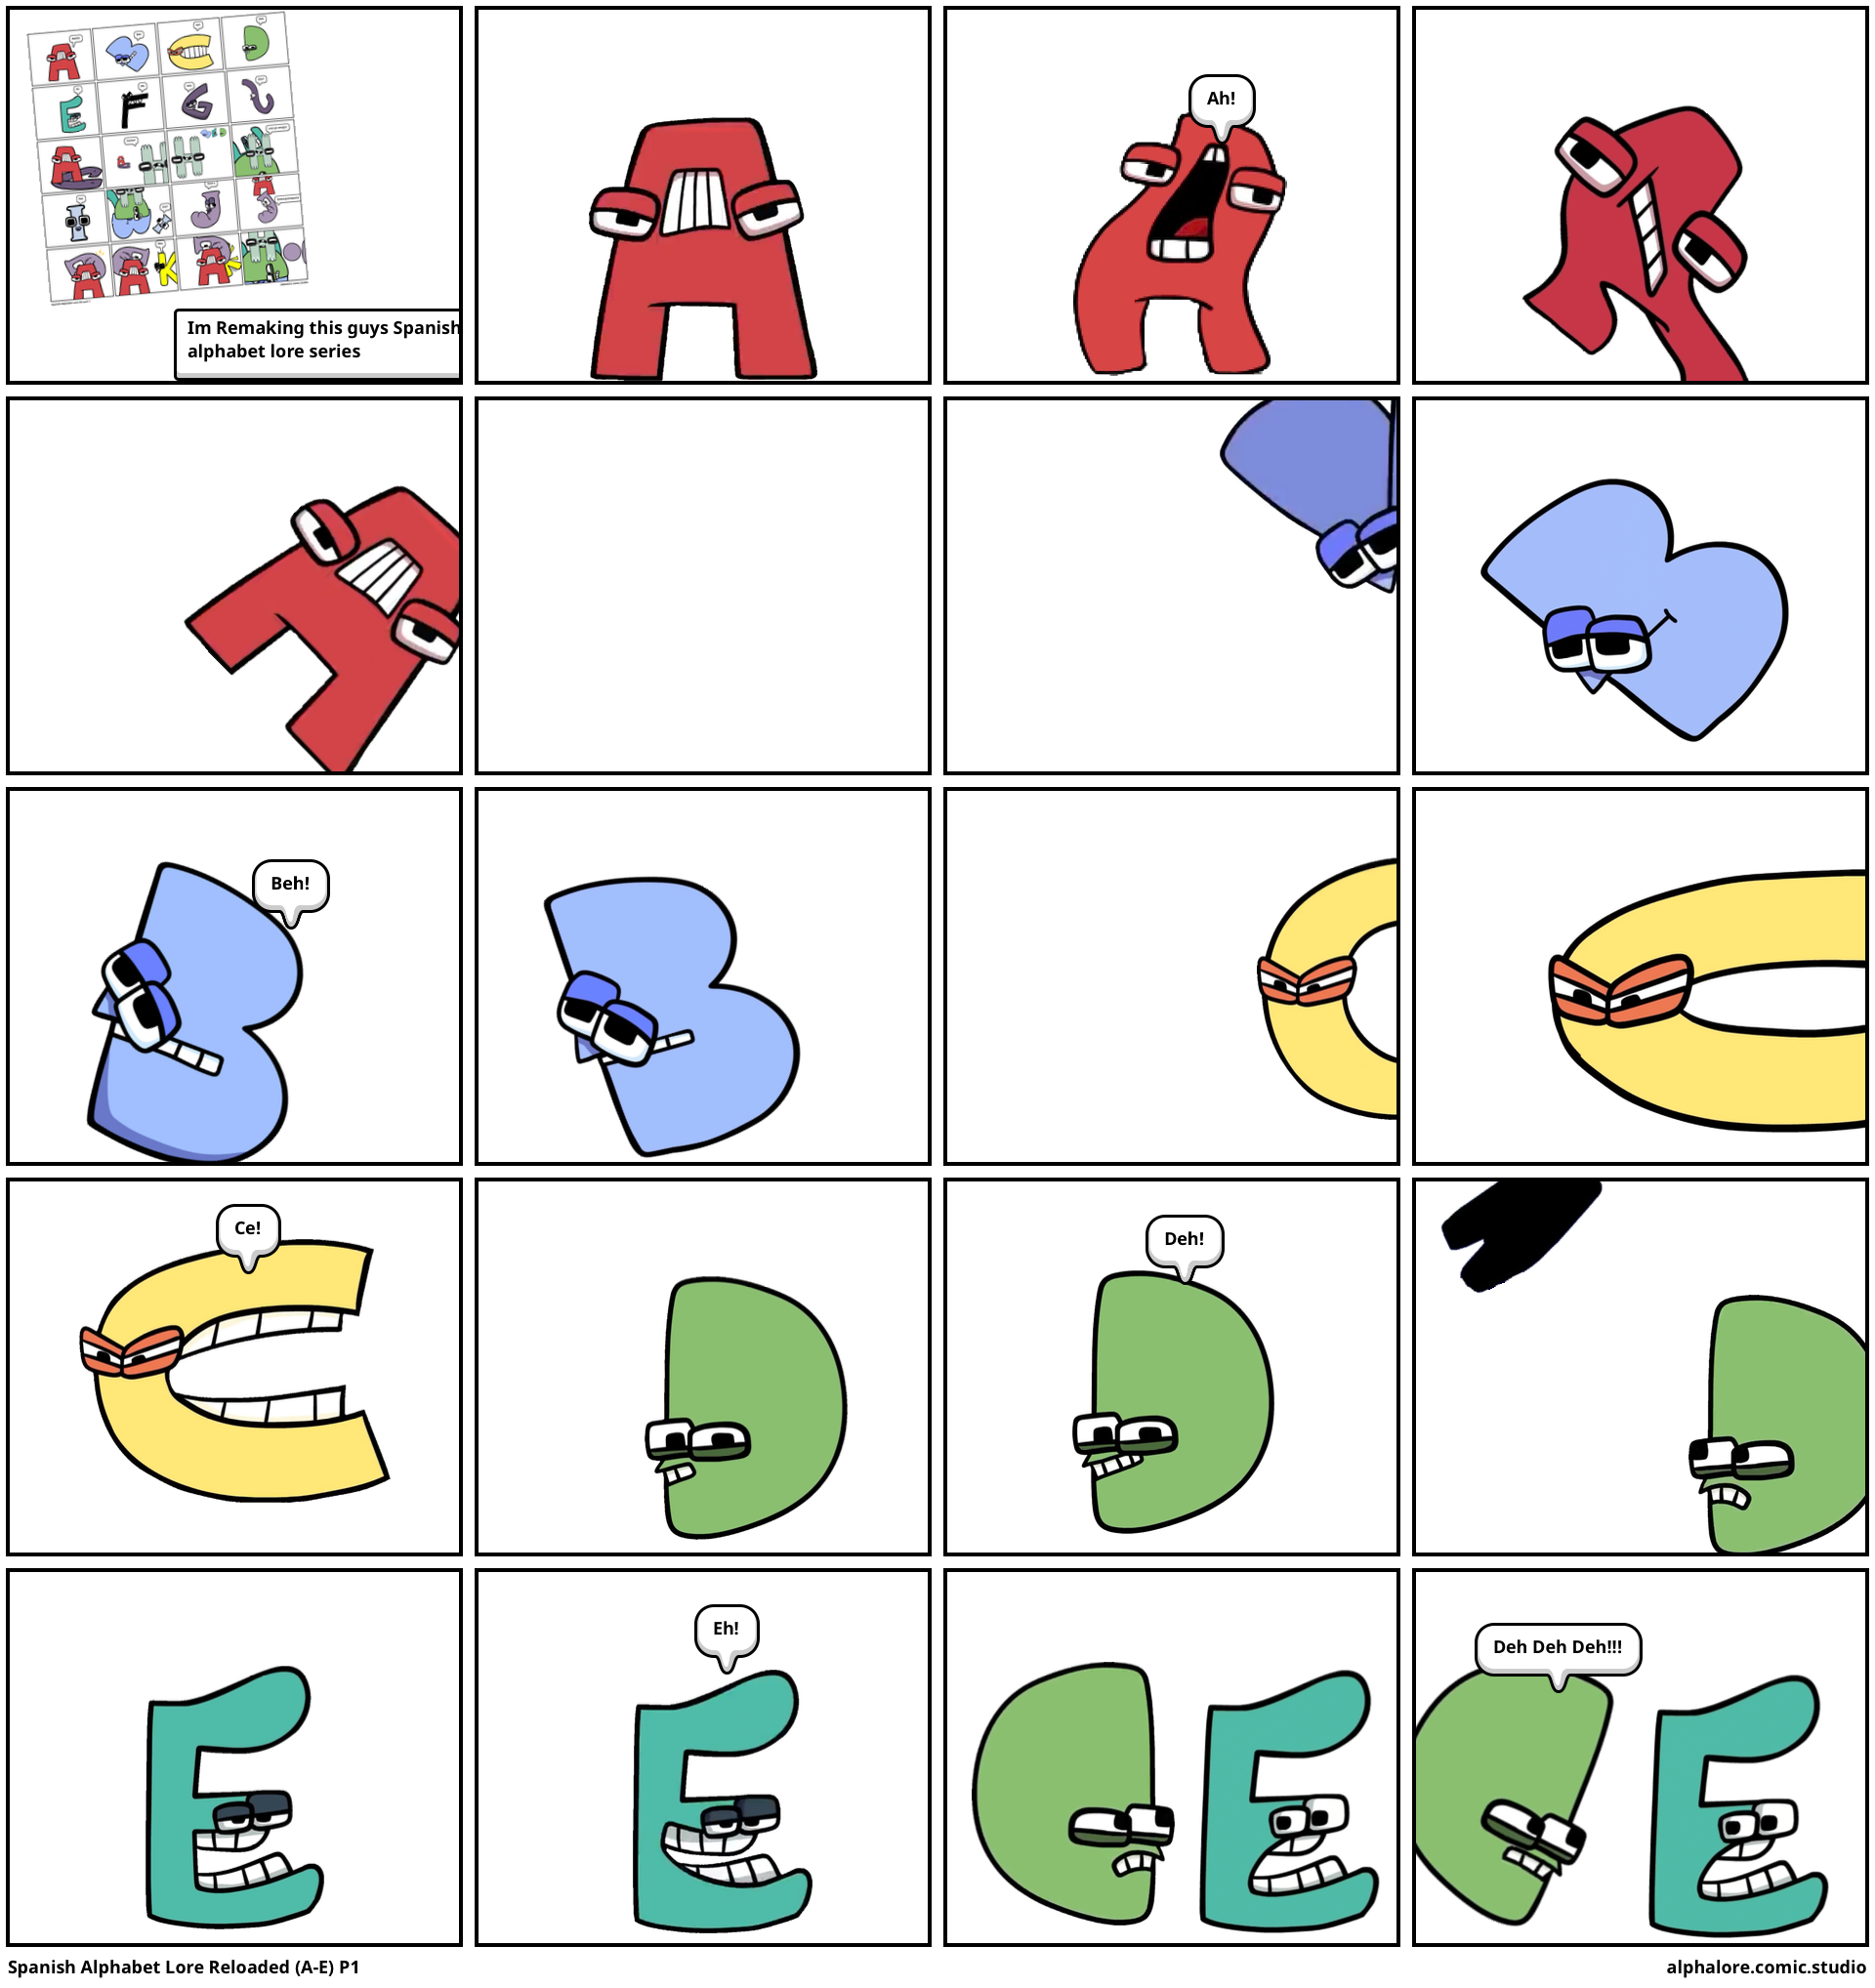 Spanish alphabet lore A-E - Comic Studio